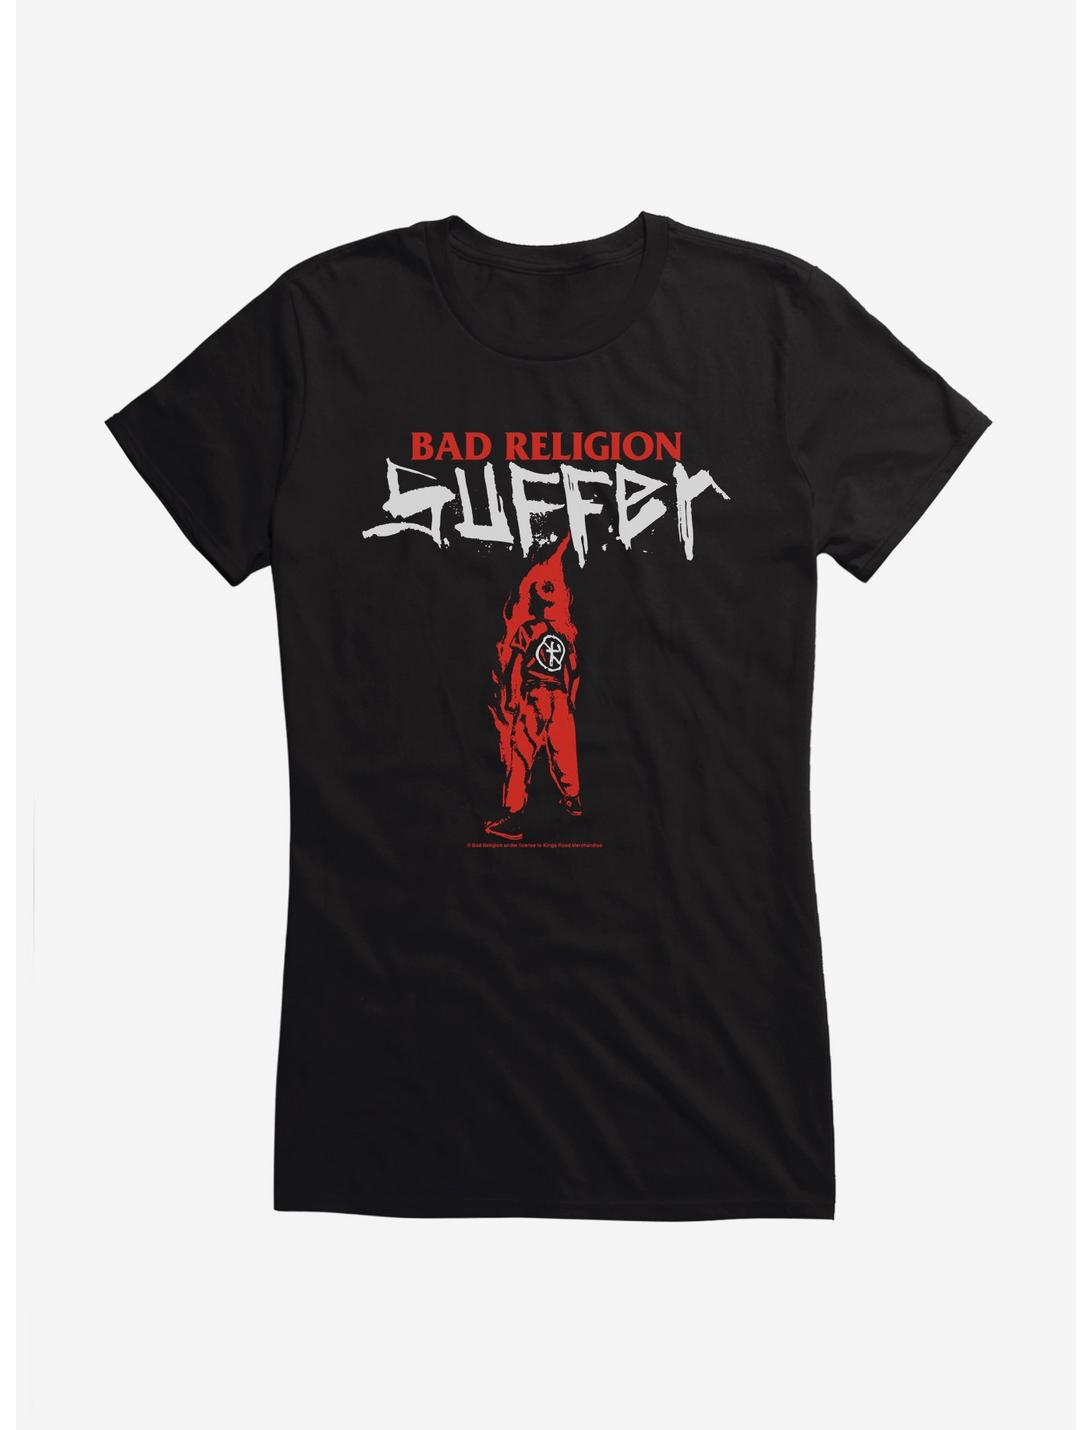 Bad Religion Suffer Boy Girls T-Shirt, BLACK, hi-res